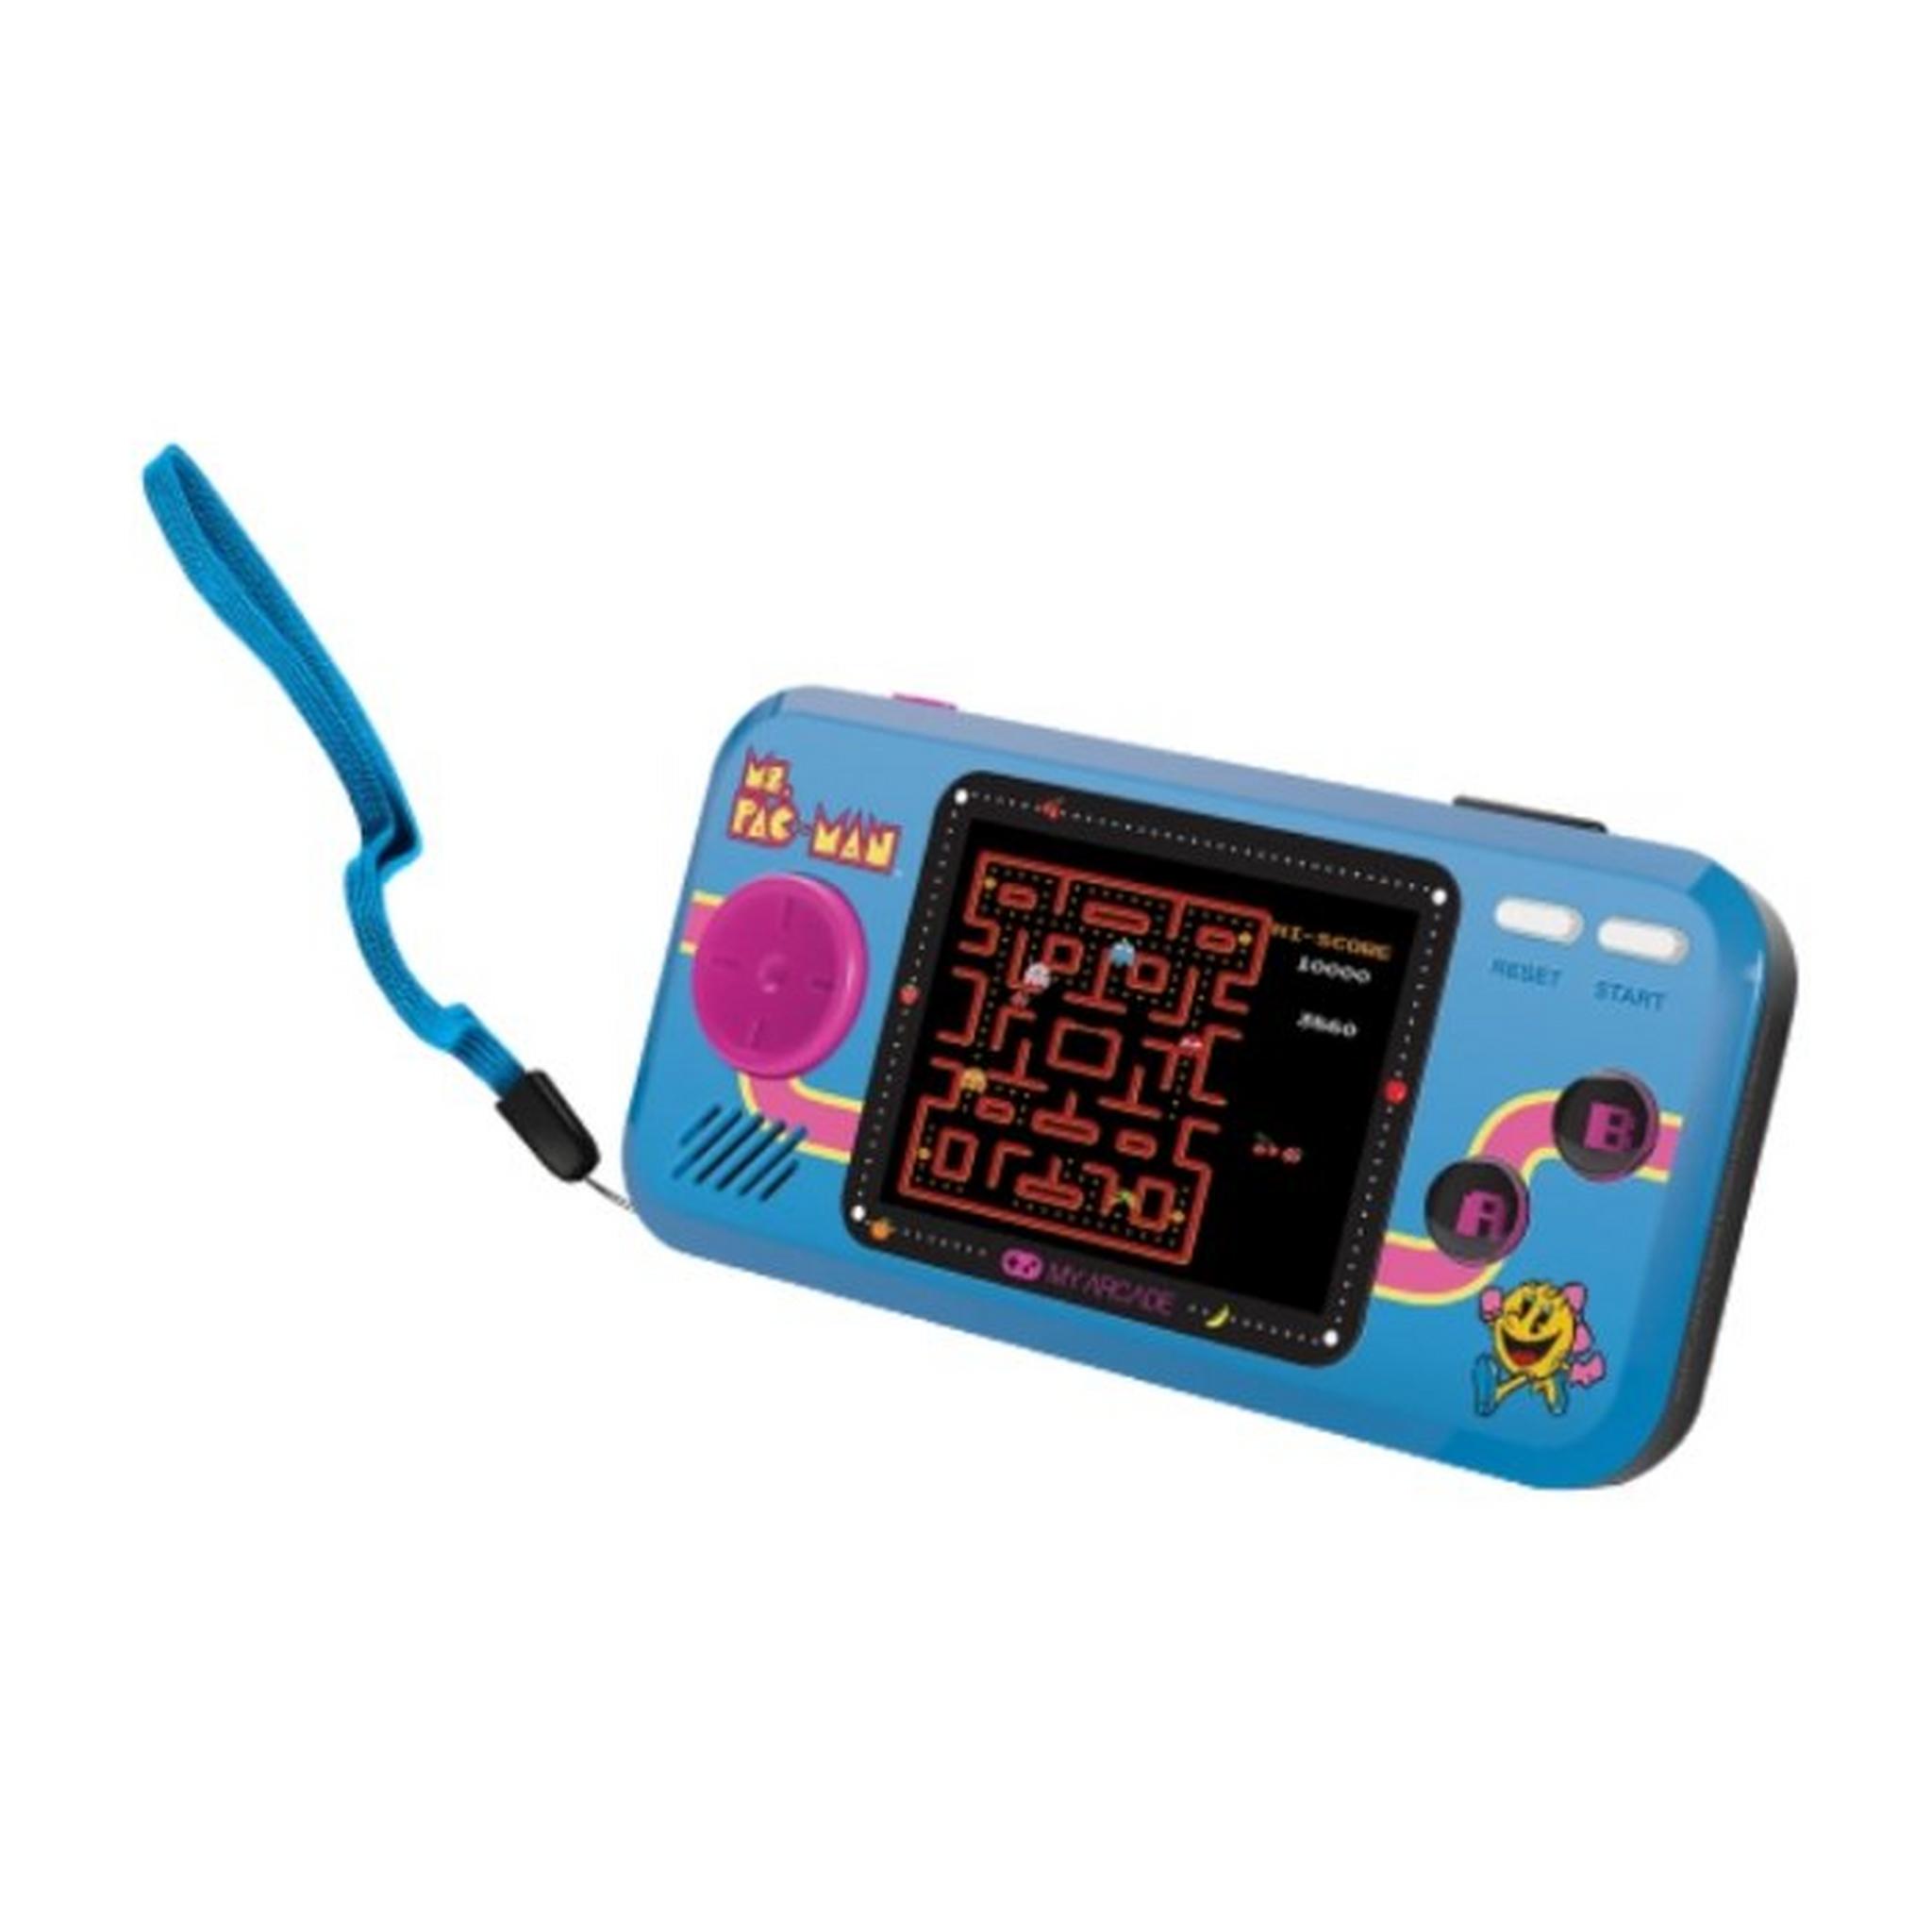 My Arcade Ms. Pac-Man Pocket Player - Blue (DGUNL-3242)